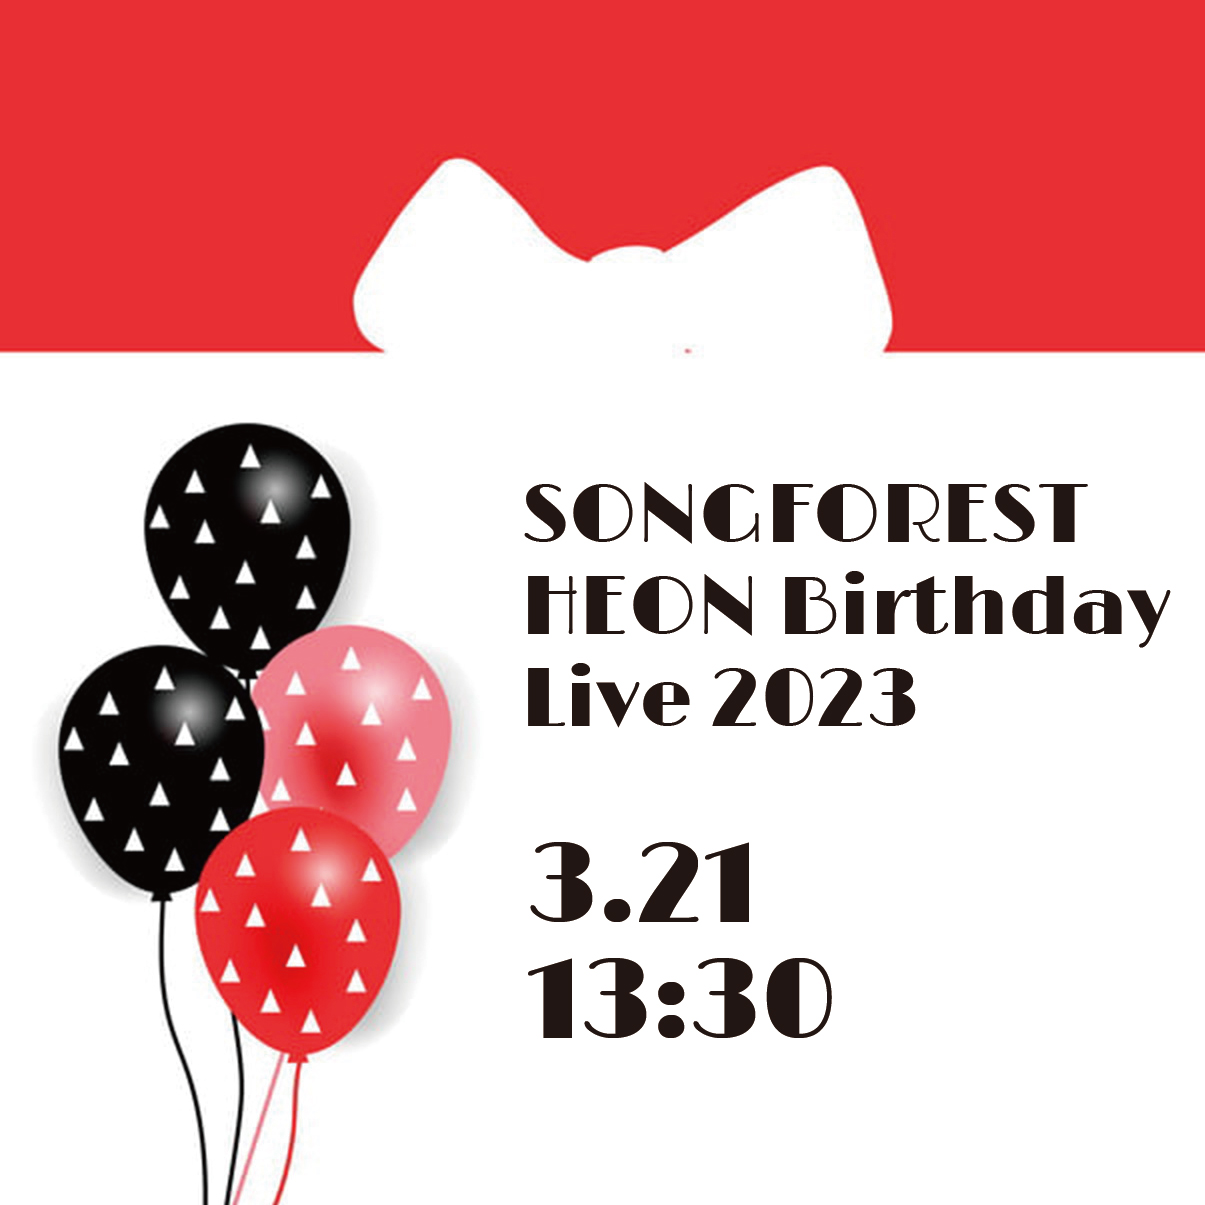 【整理番号抽選先行販売】SONGFOREST HEON Birthday Live 2023 13:30公演